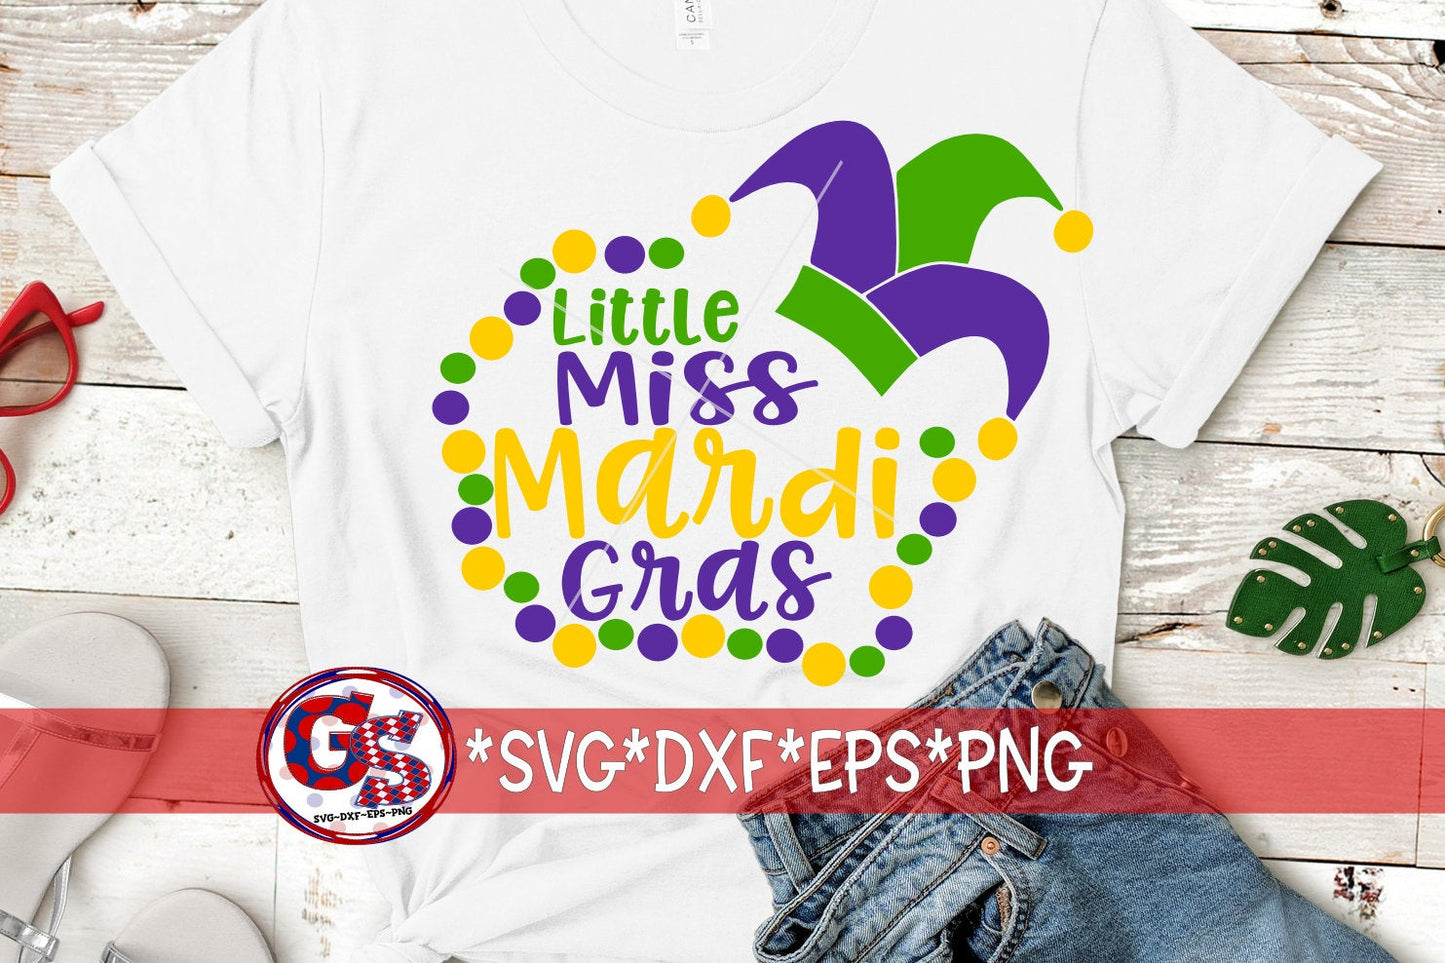 Little Miss Mardi Gras svg png eps dxf. Mardi Gras SvG | Little Miss Mardi Gras SvG | Little Miss SvG | Instant Download Cut Files.